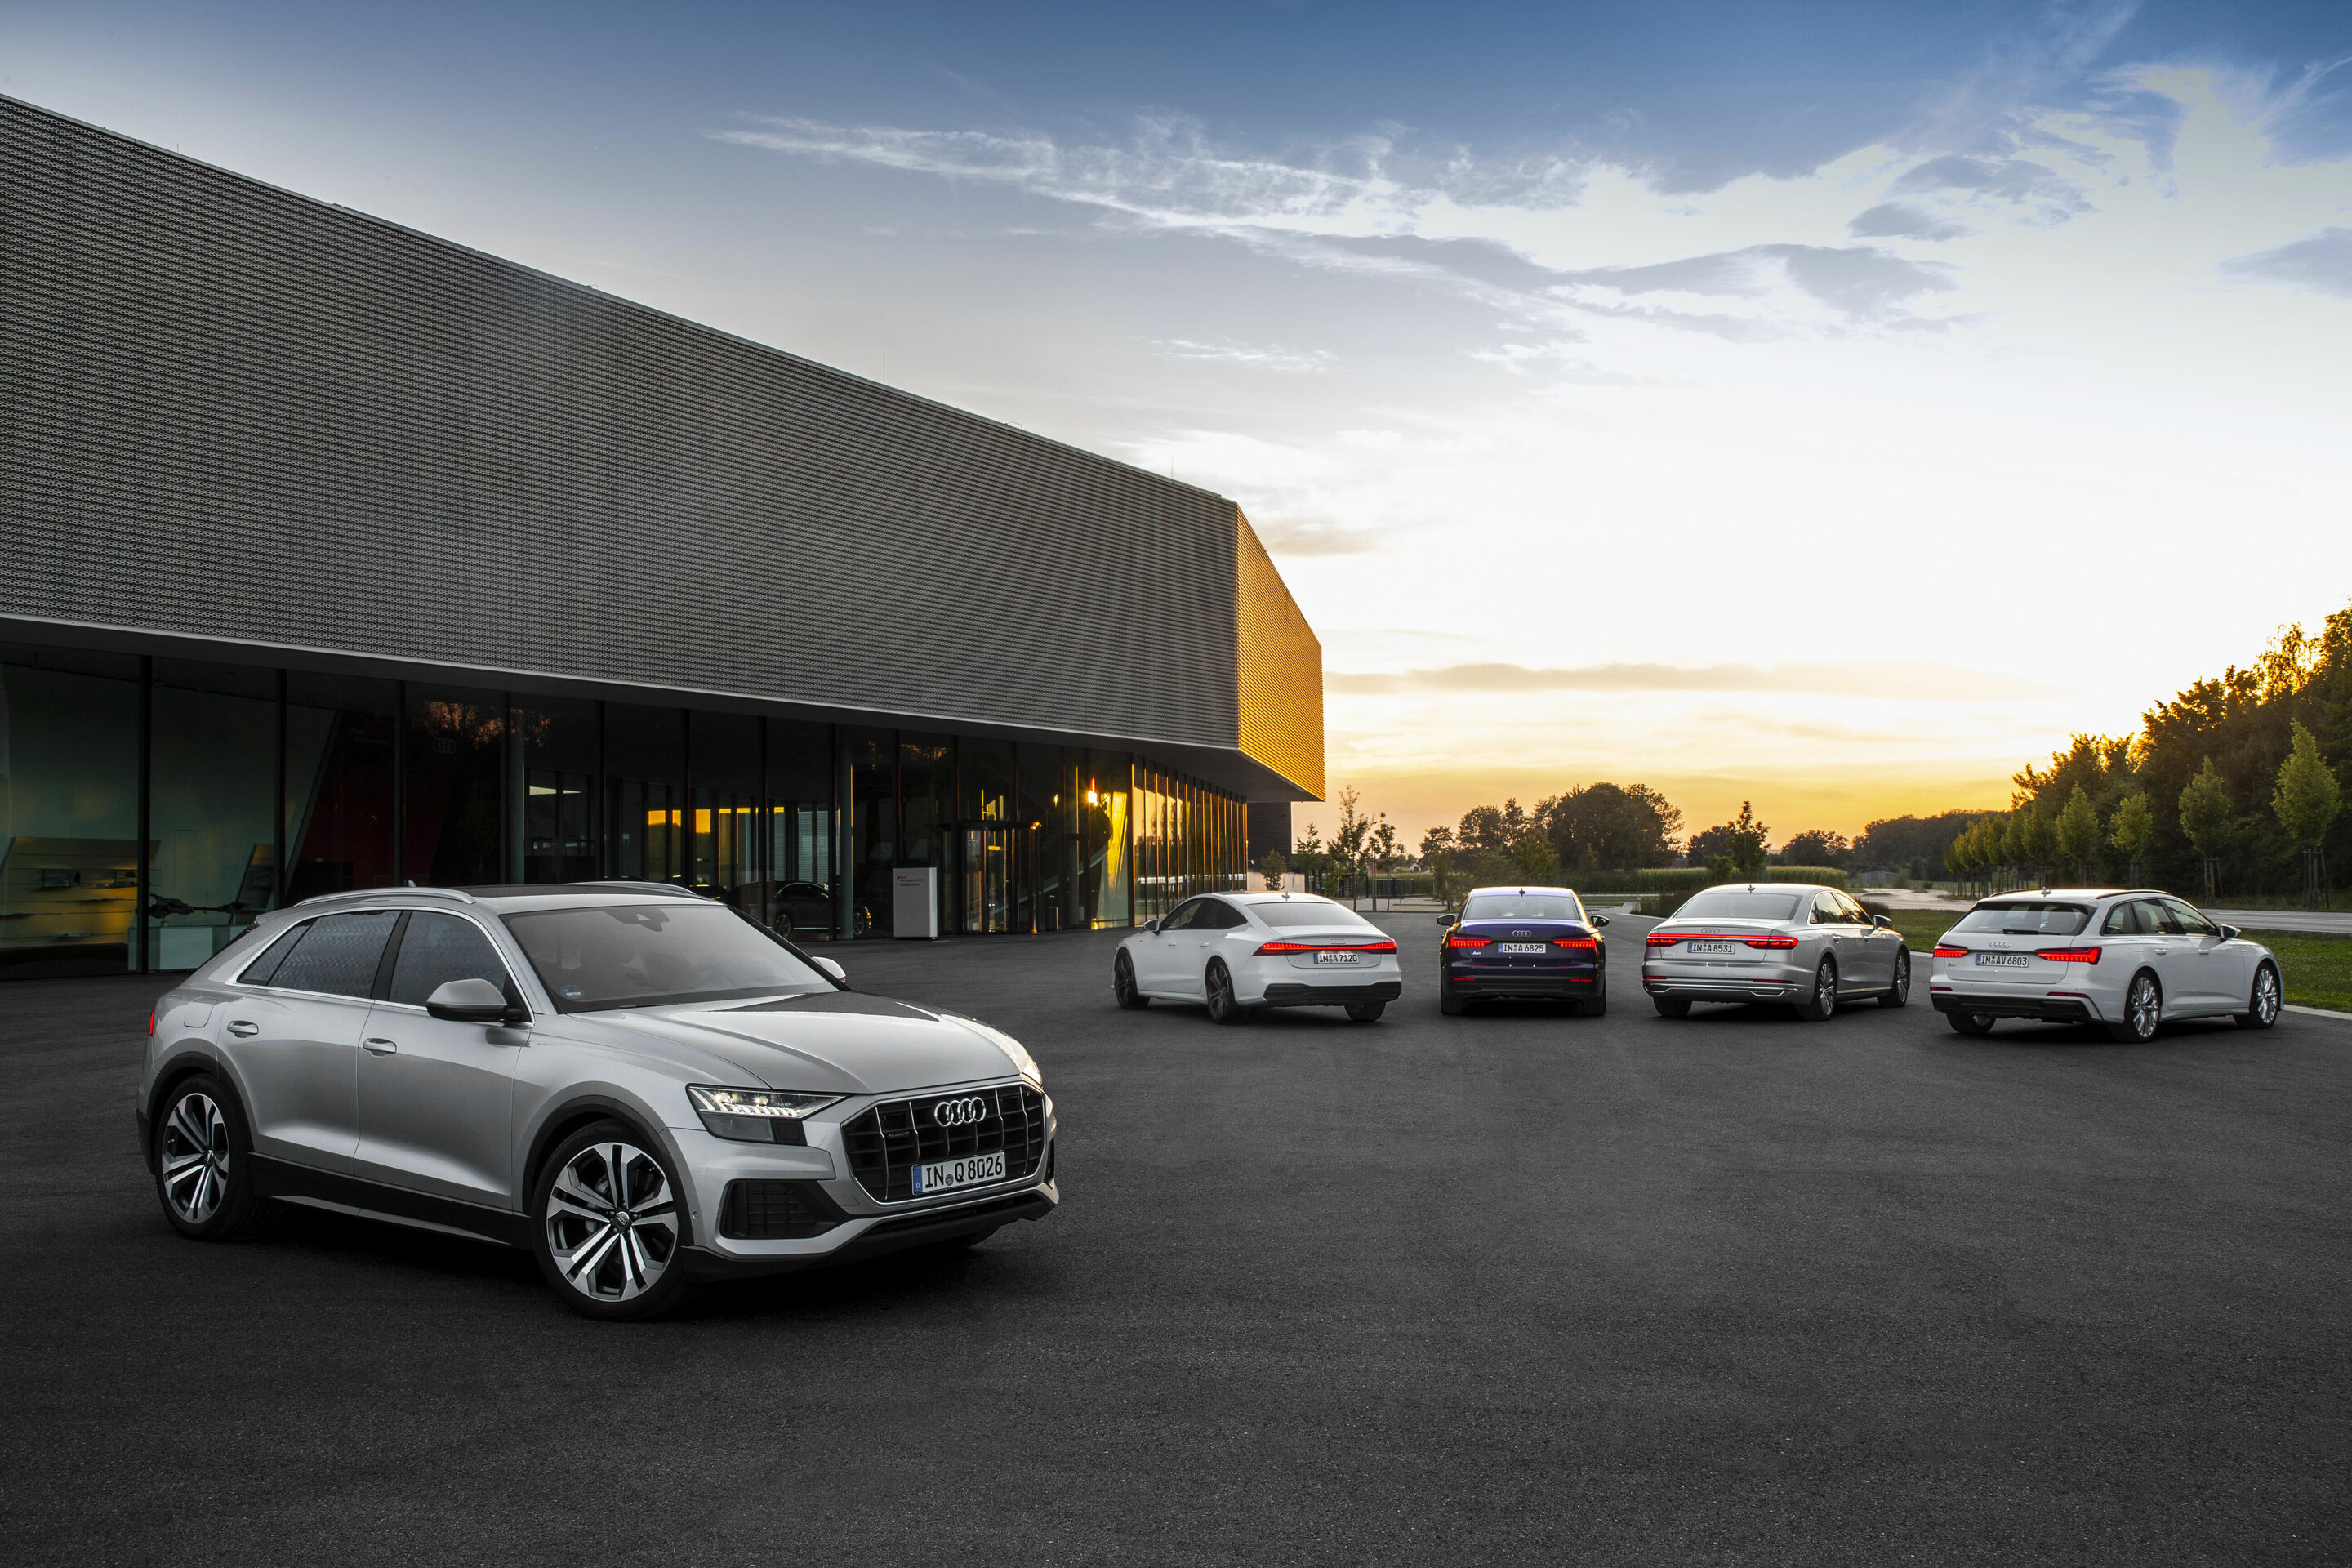 Audi’s new full-size class